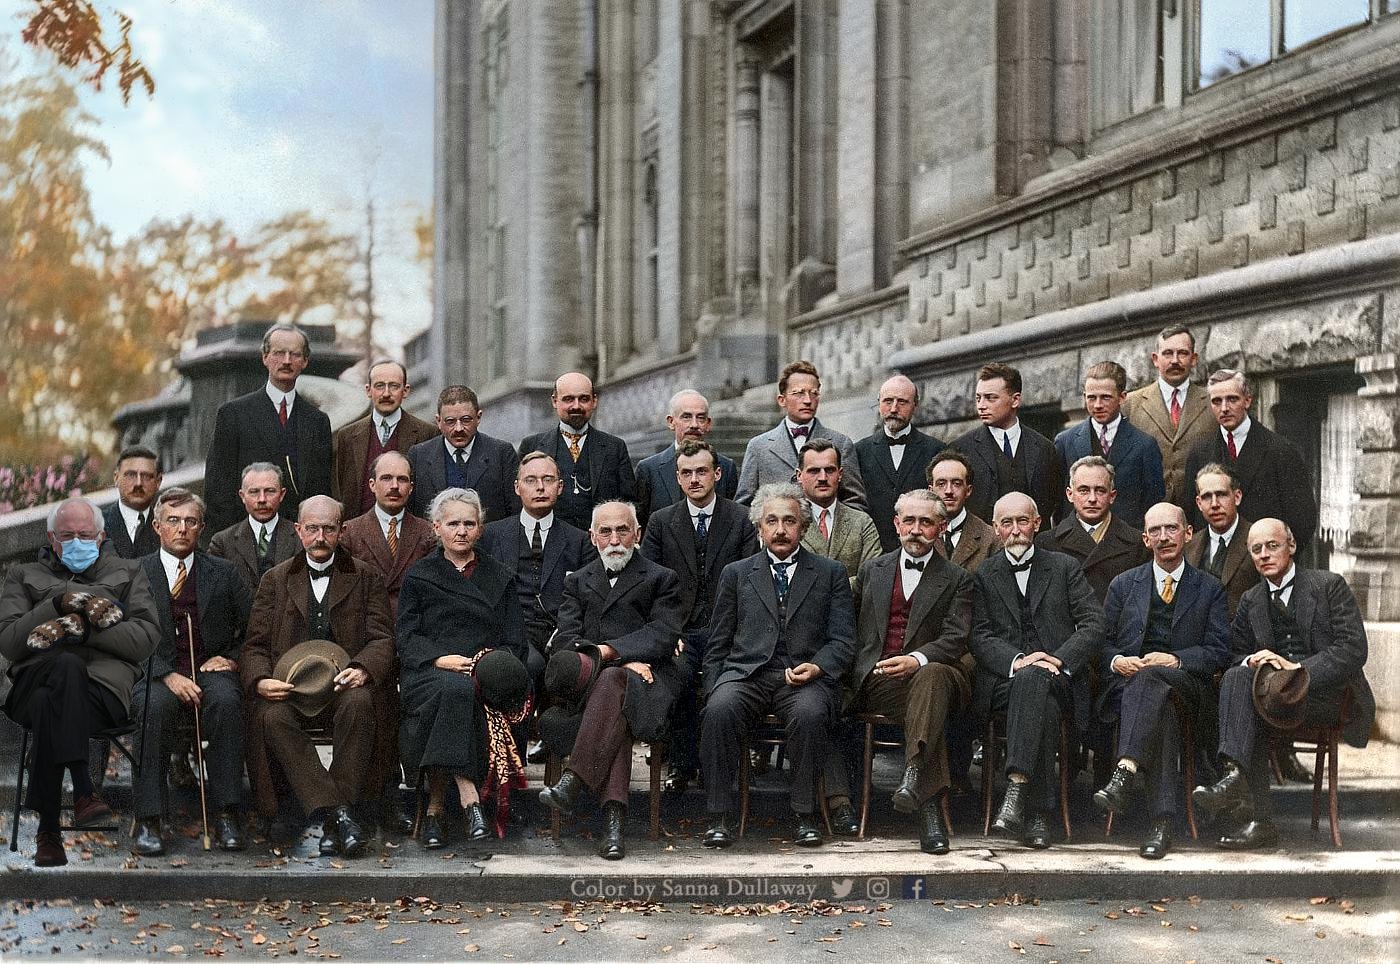 Solvay Conference